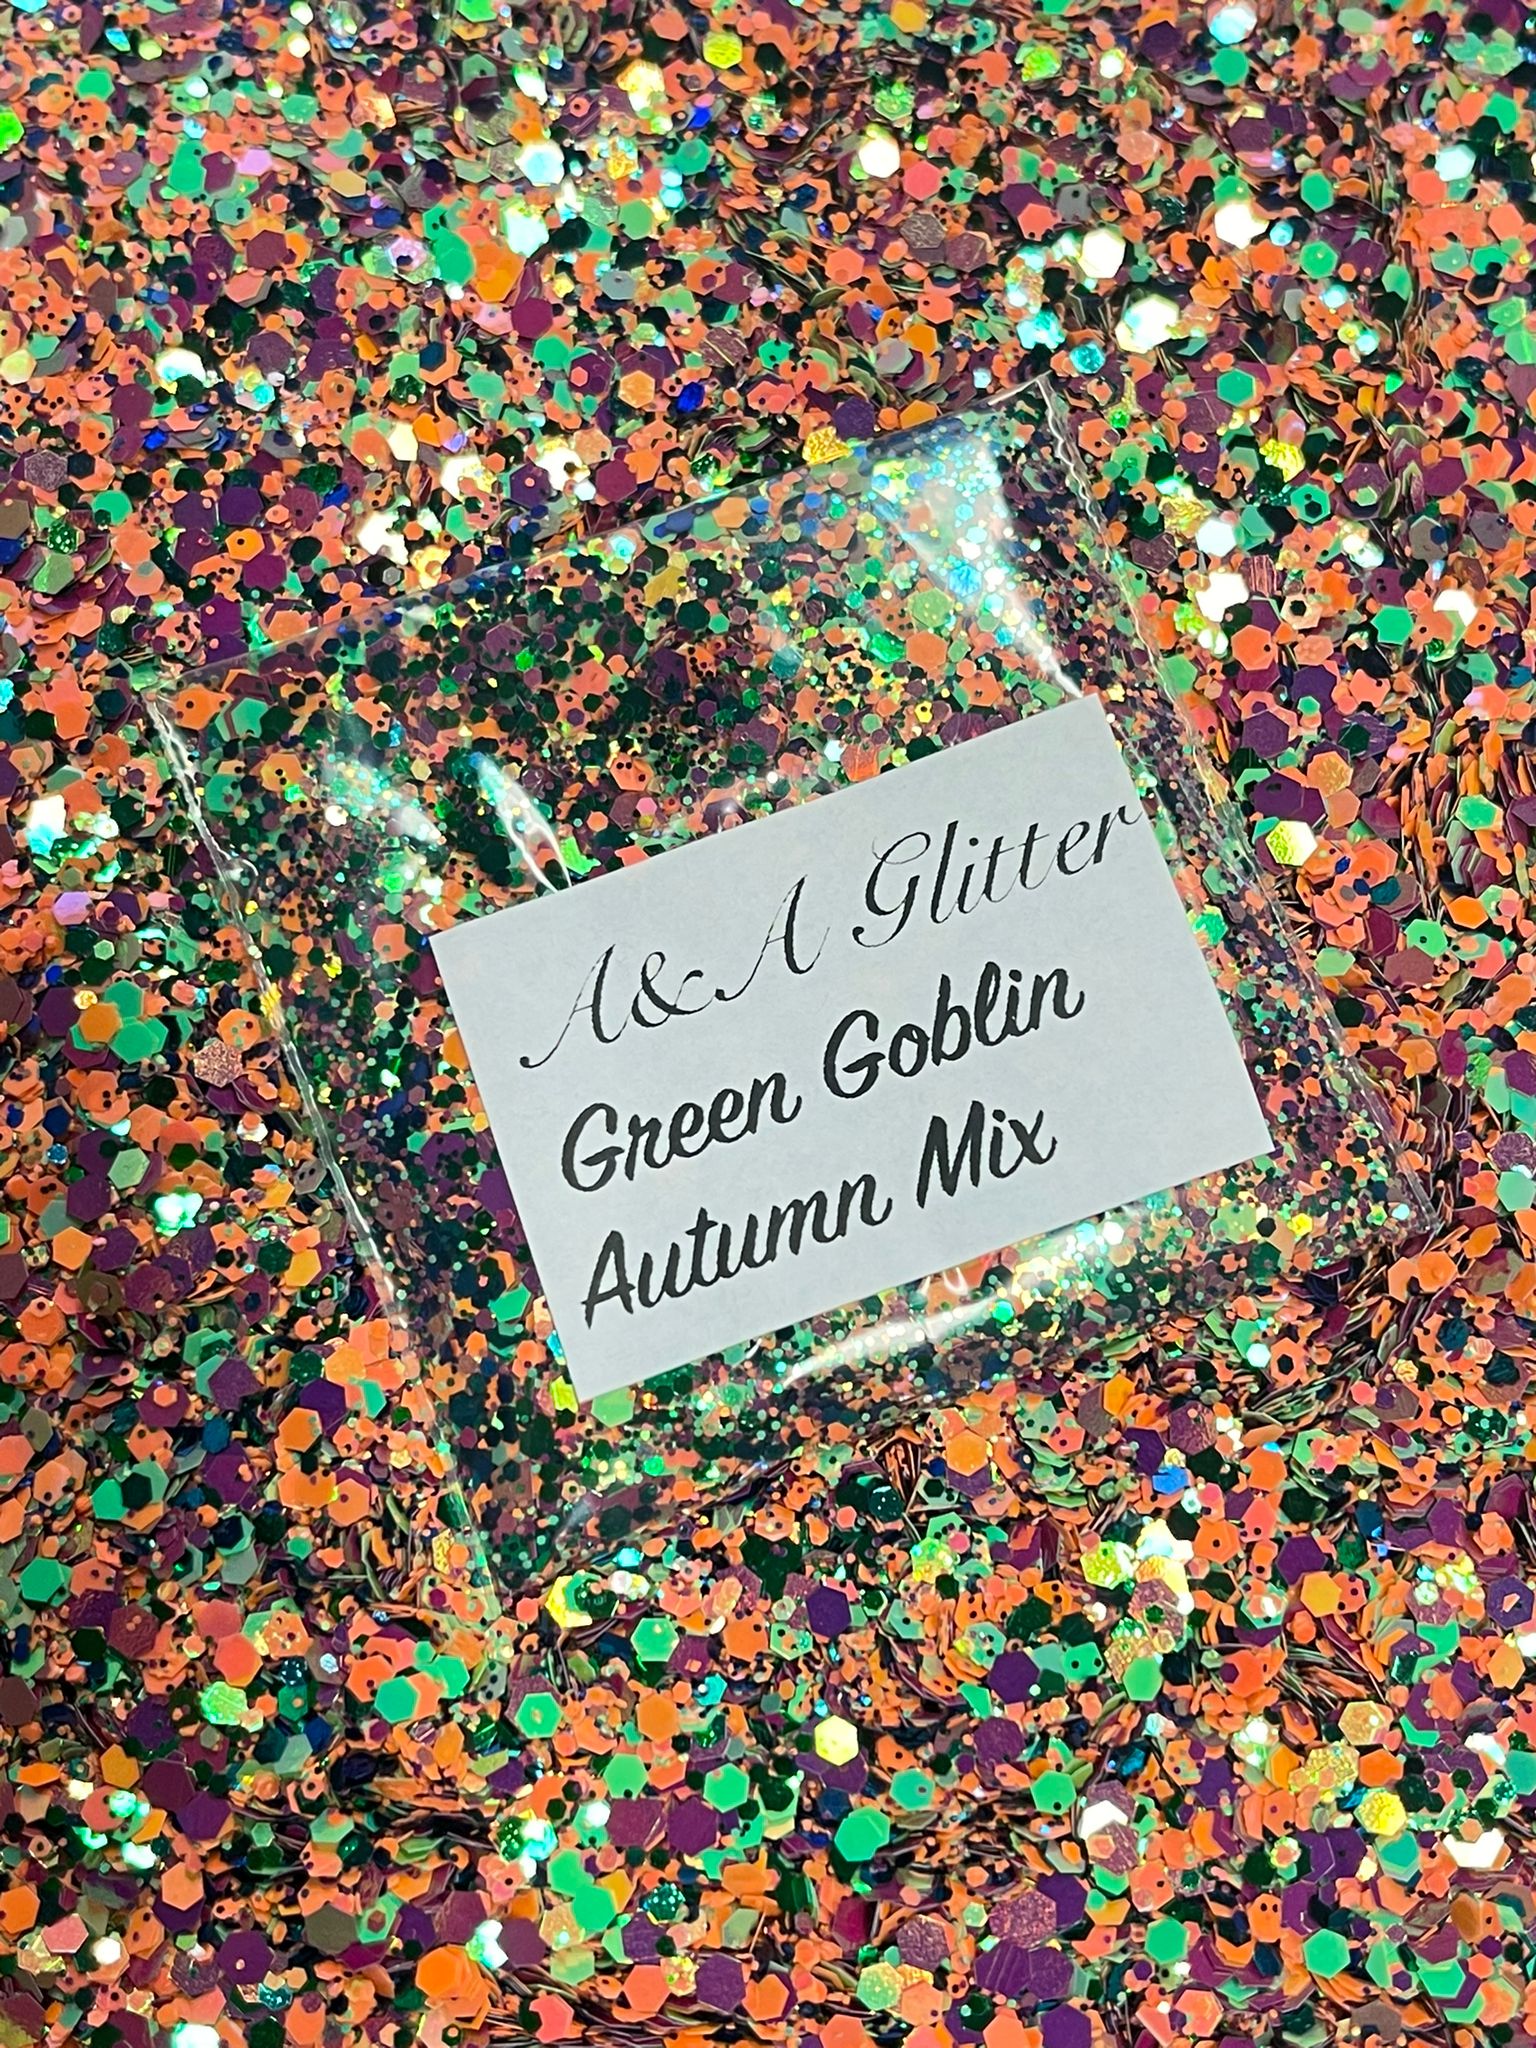 Green Goblin - Autumn Mix